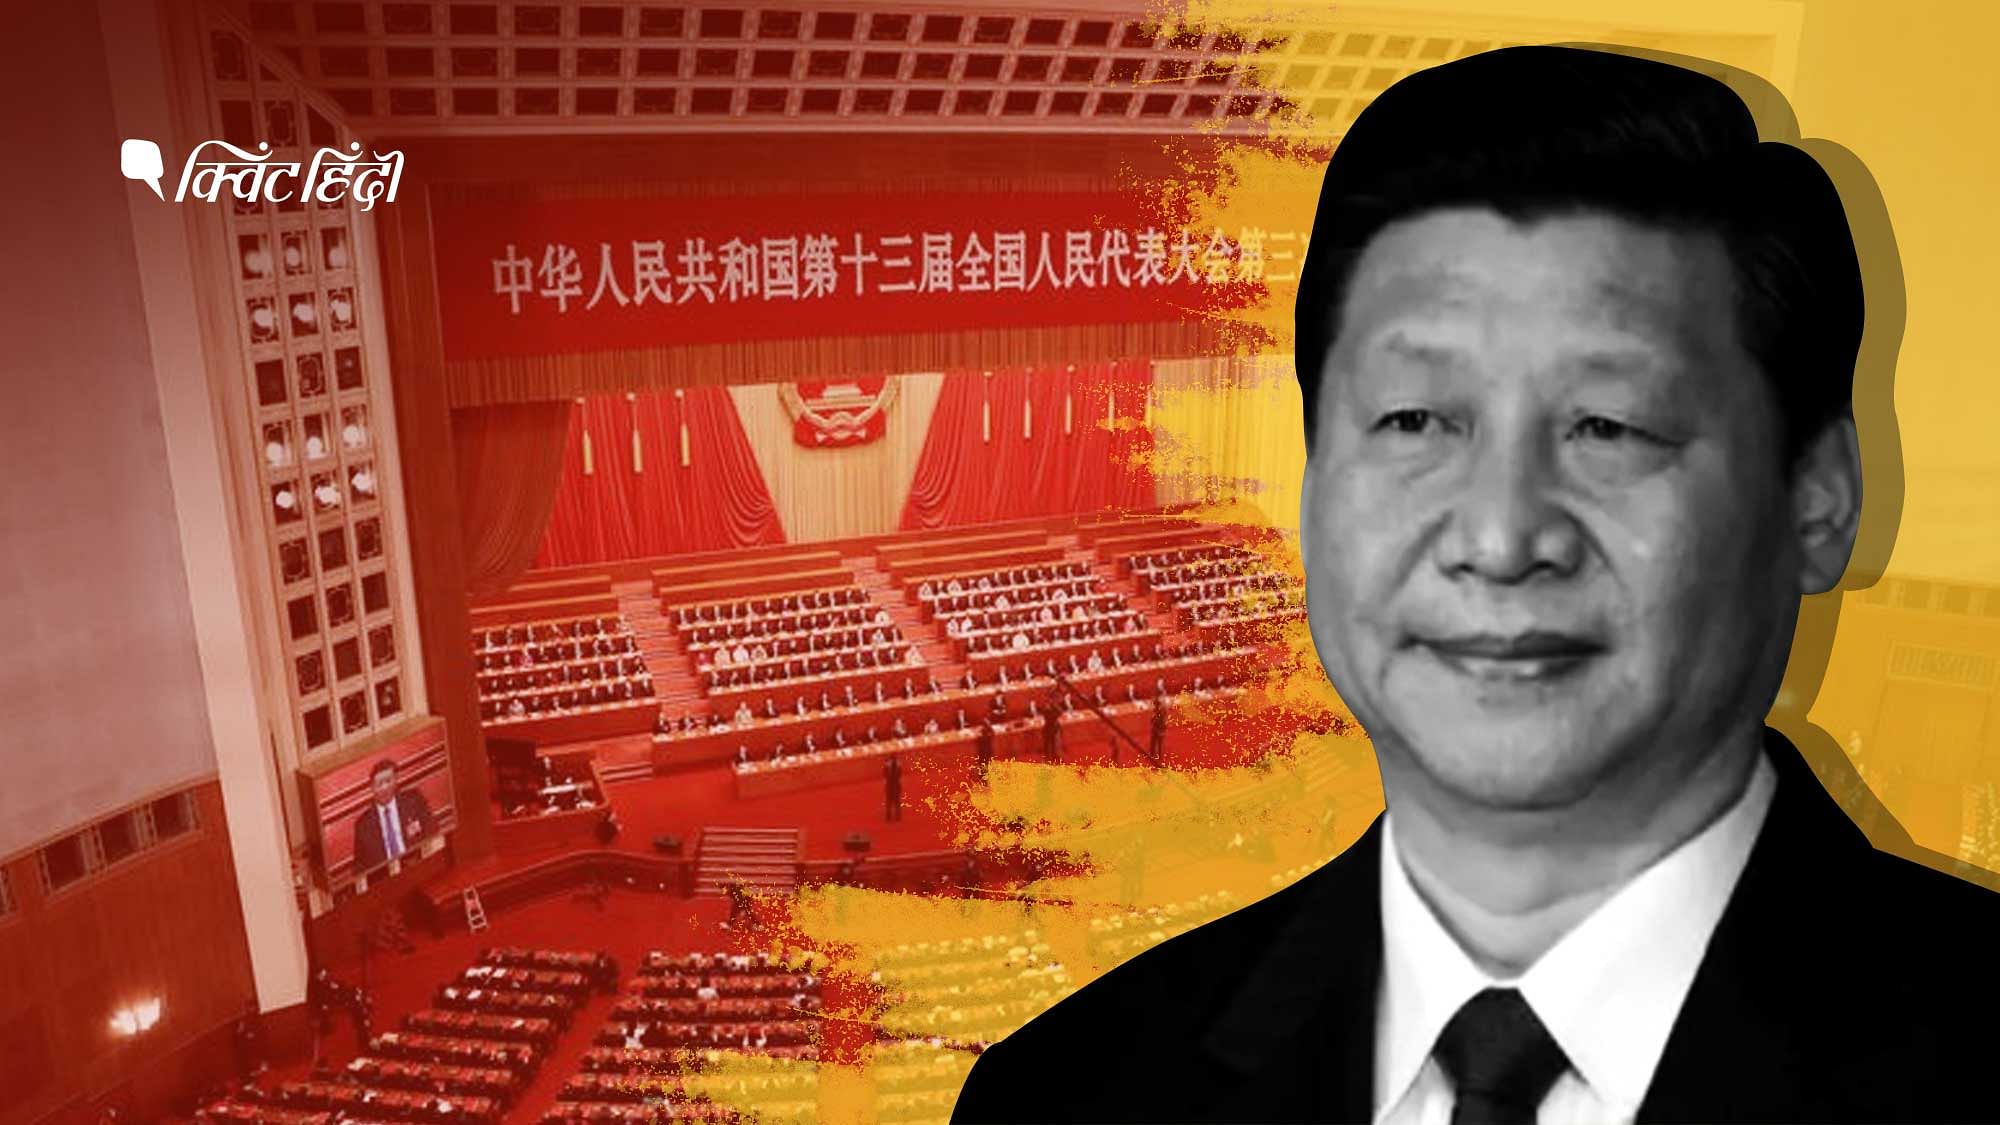 <div class="paragraphs"><p>Xi Jinping के फिर राष्ट्रपति बनने पर मुहर लगेगी? चीन में हो रही यह बैठक अहम है?</p></div>